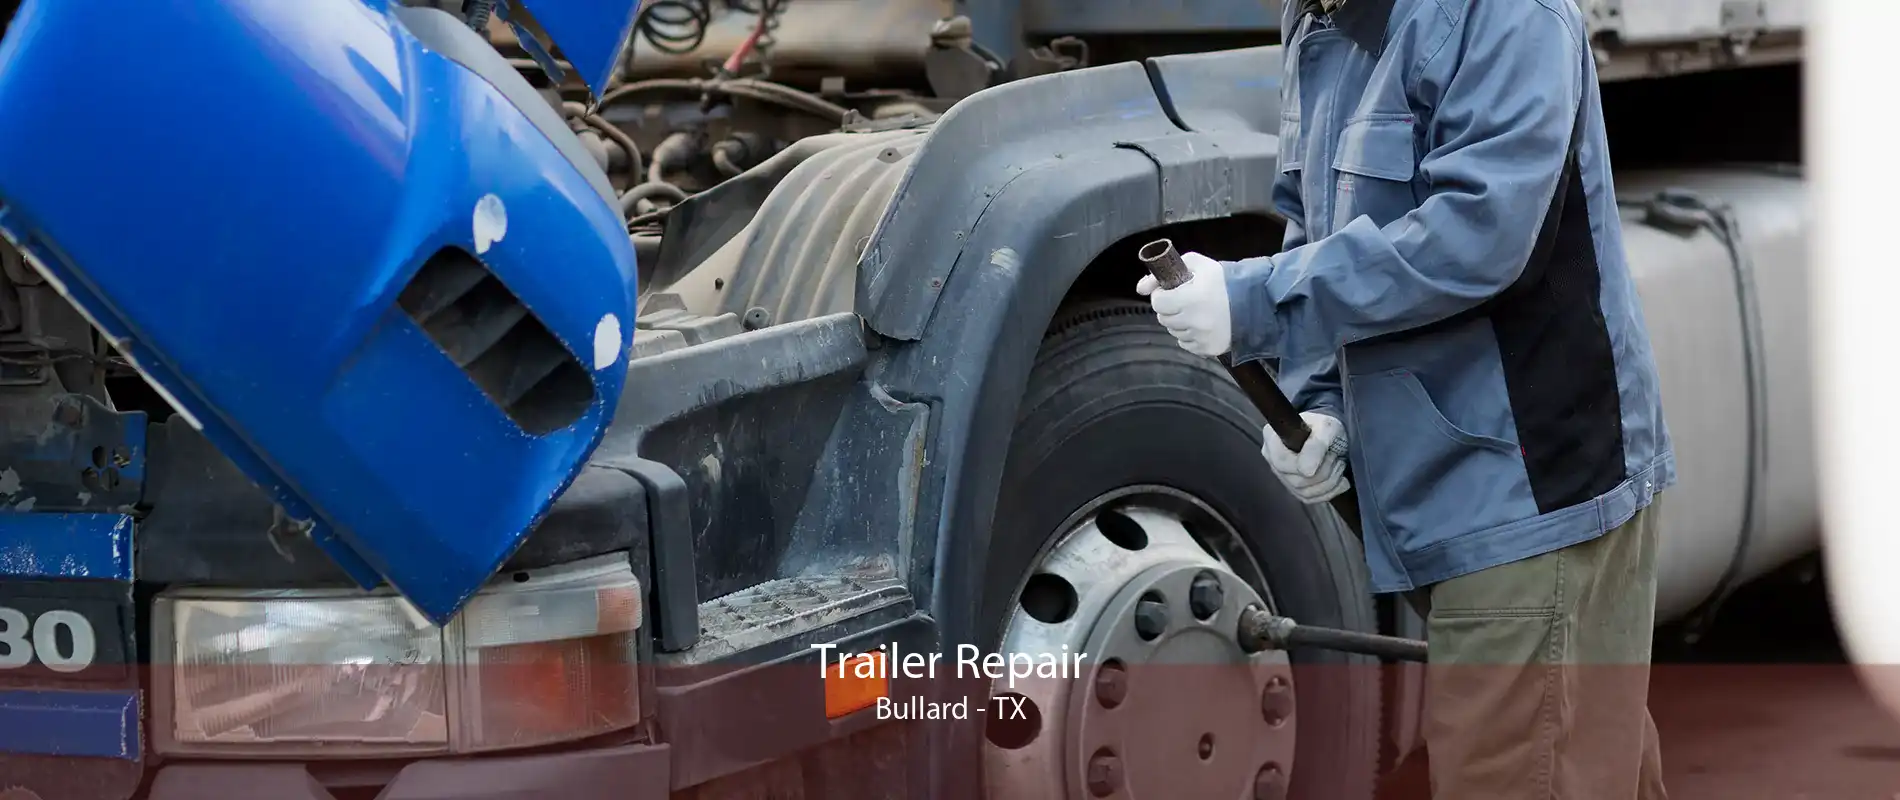 Trailer Repair Bullard - TX